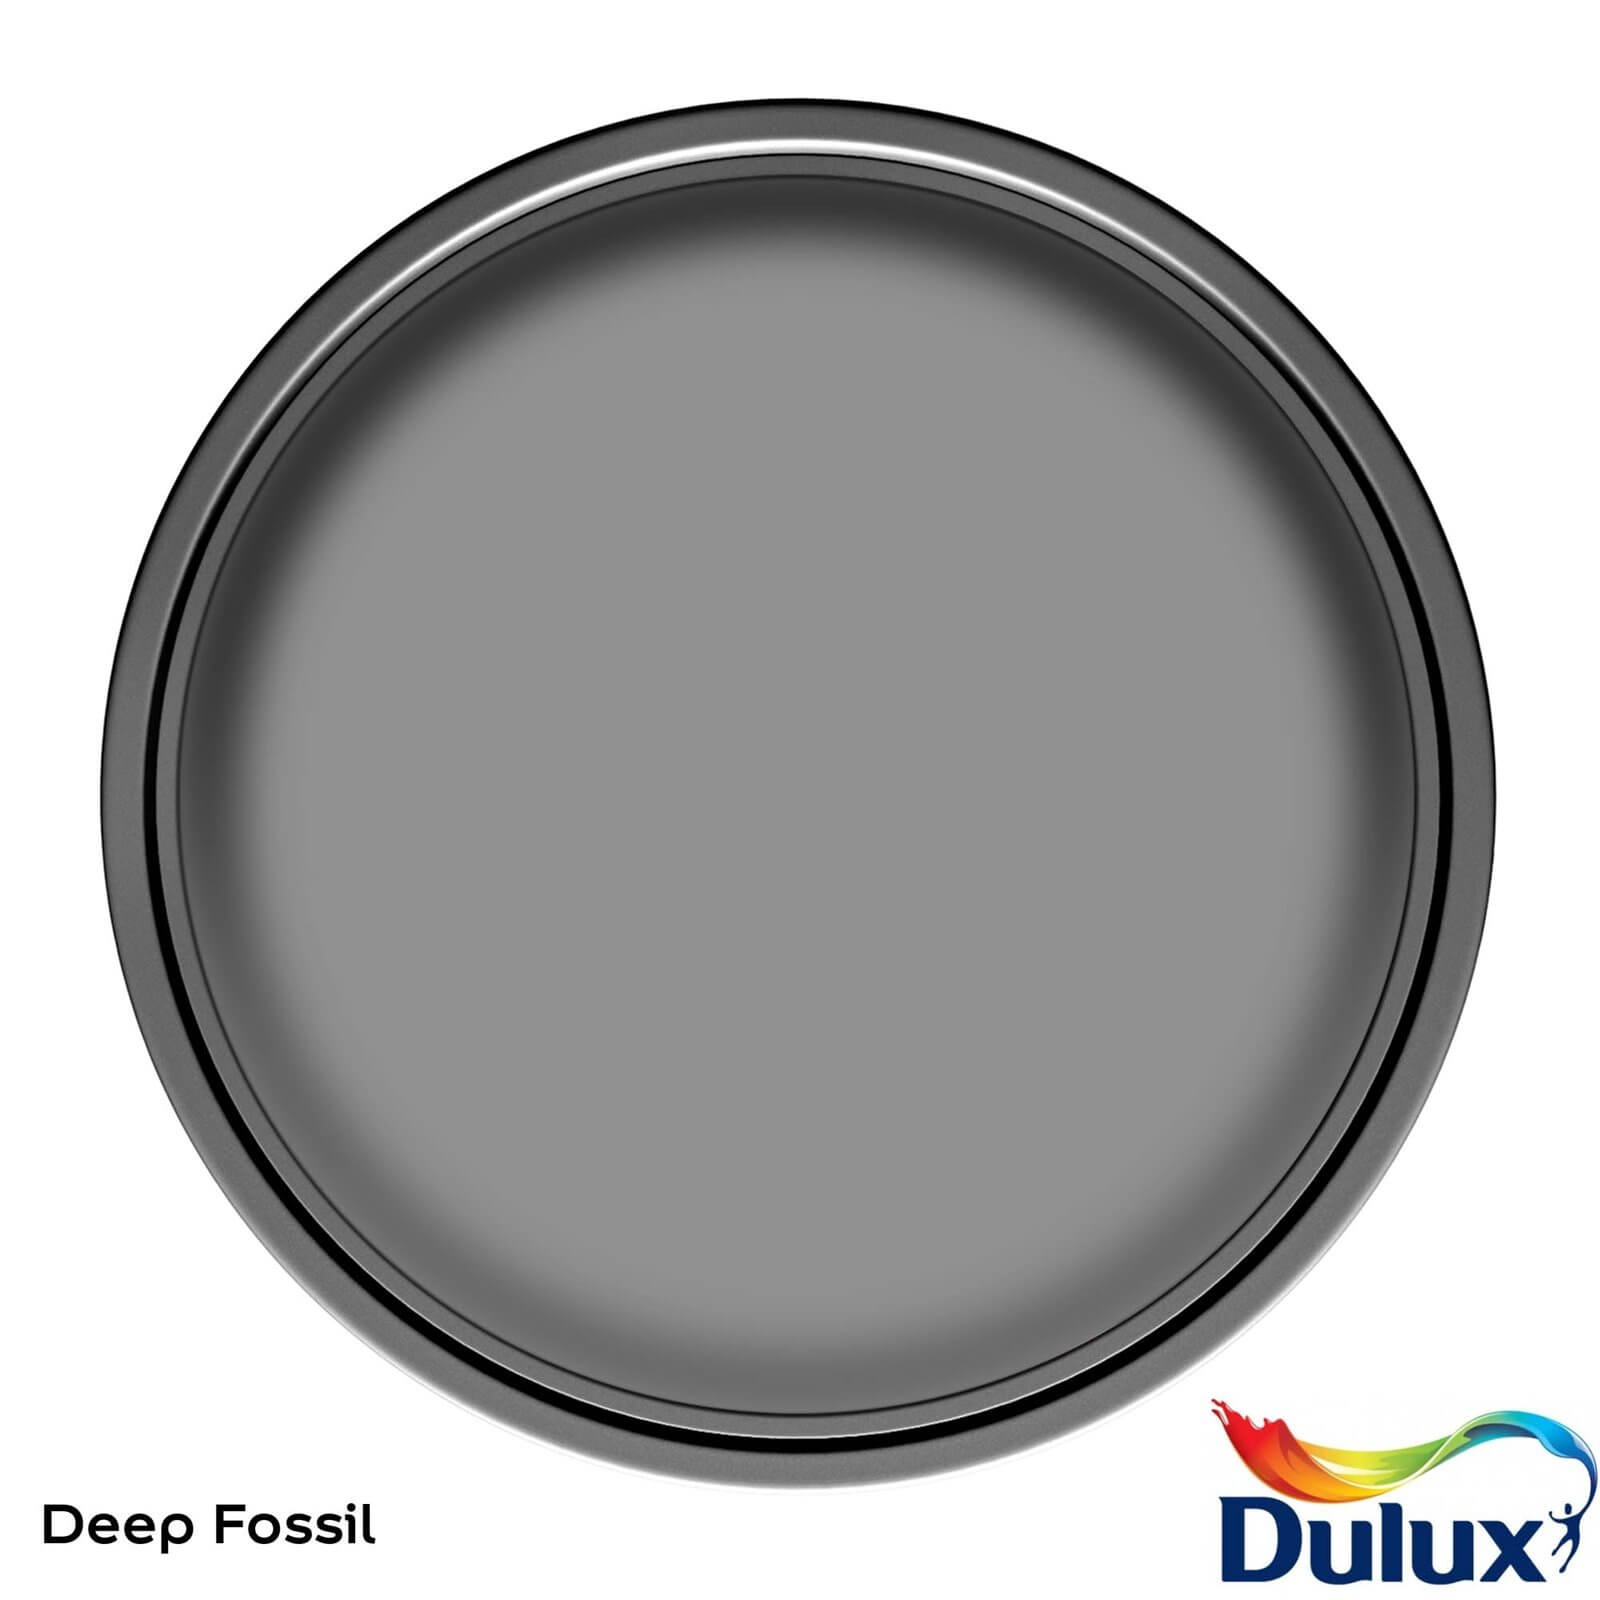 Dulux Easycare Kitchen Deep Fossil Matt Paint - 2.5L